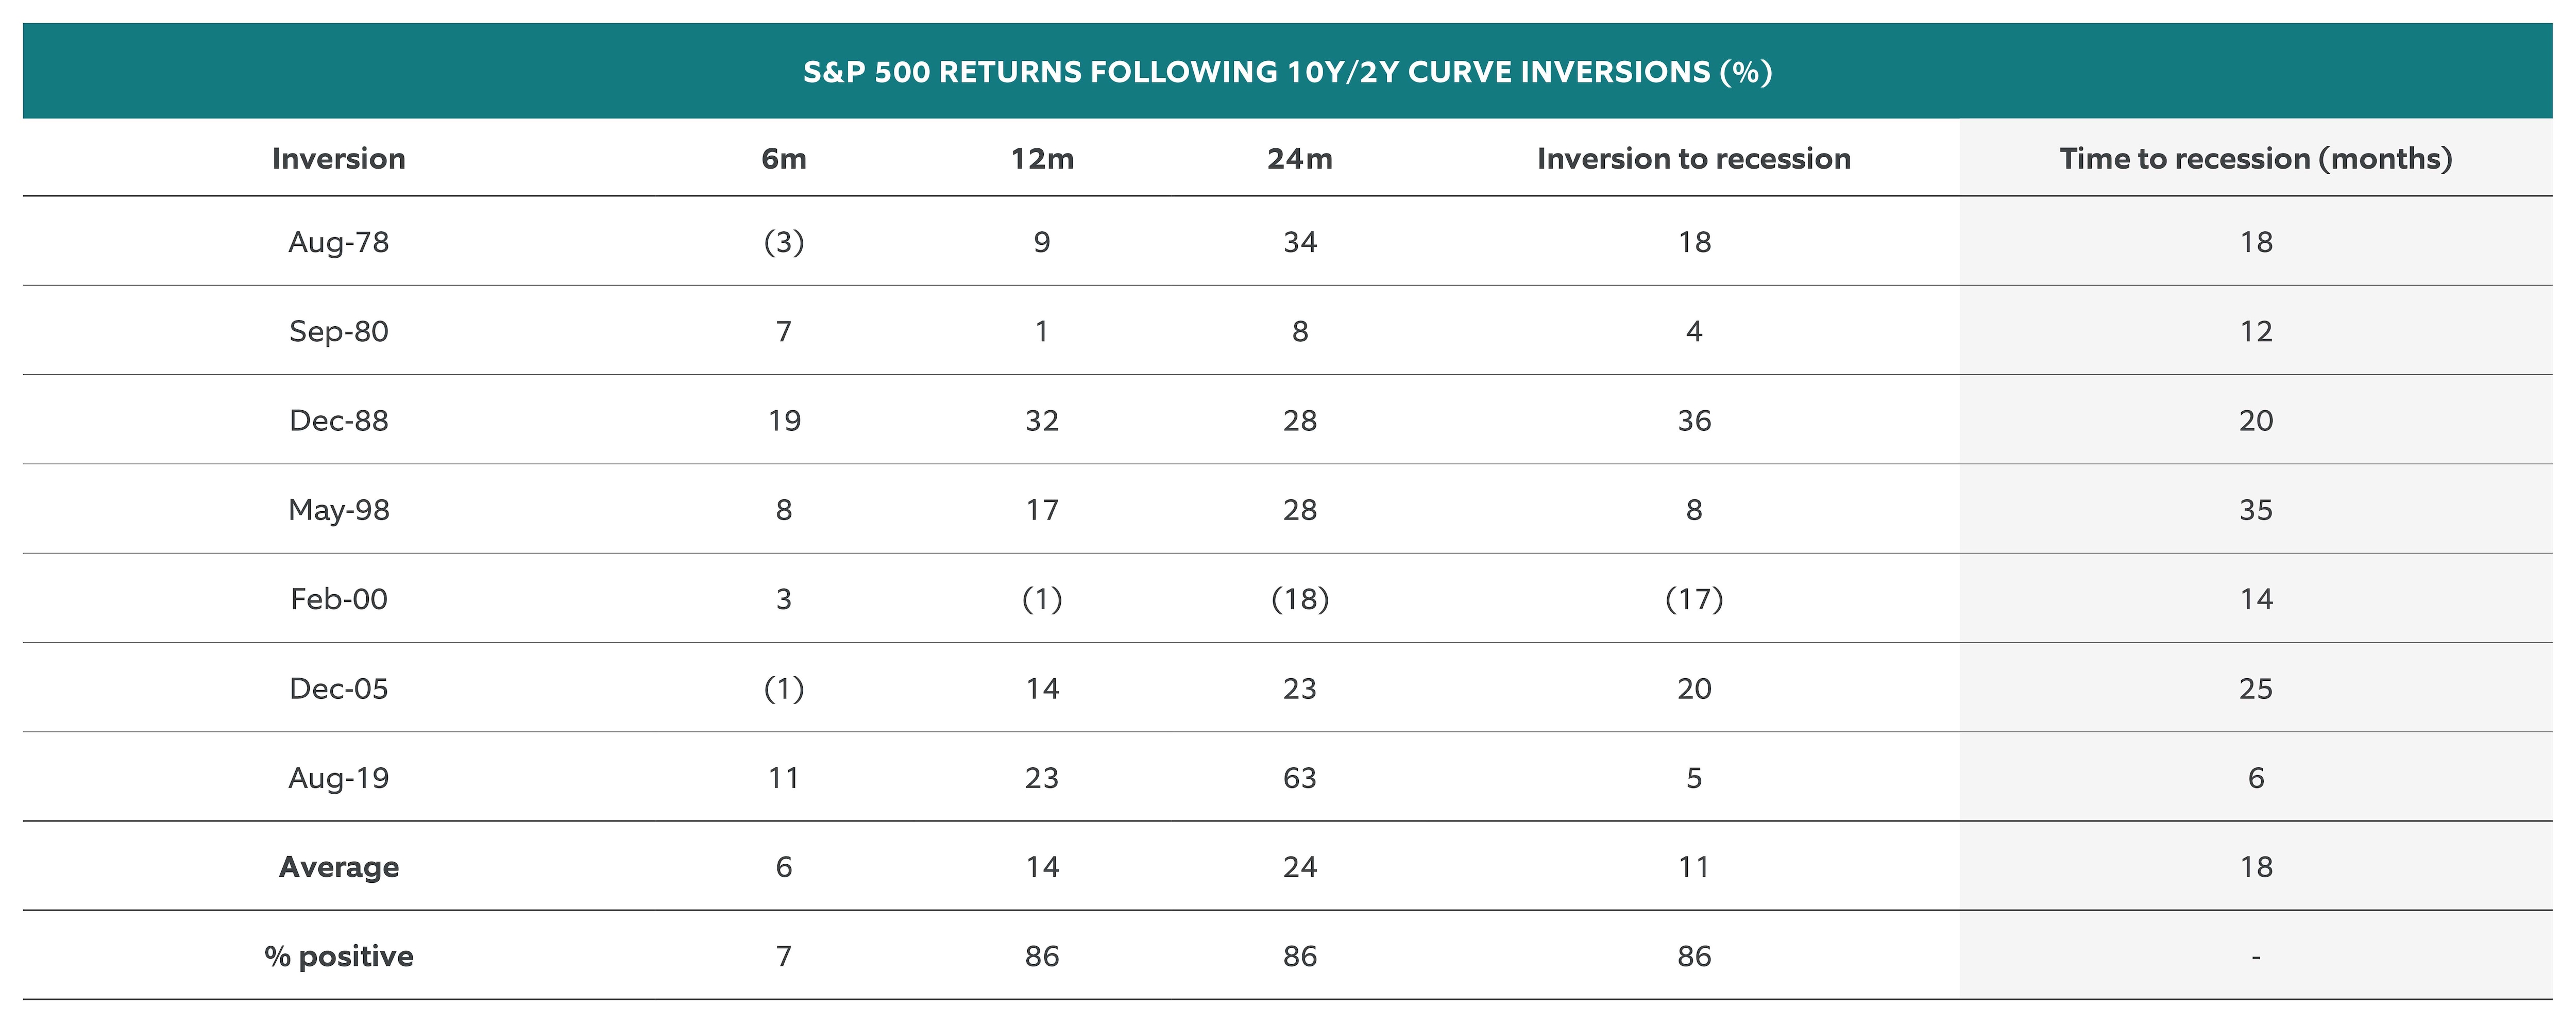 S&P 500 RETURNS FOLLOWING 10Y/2Y CURVE INVERSIONS